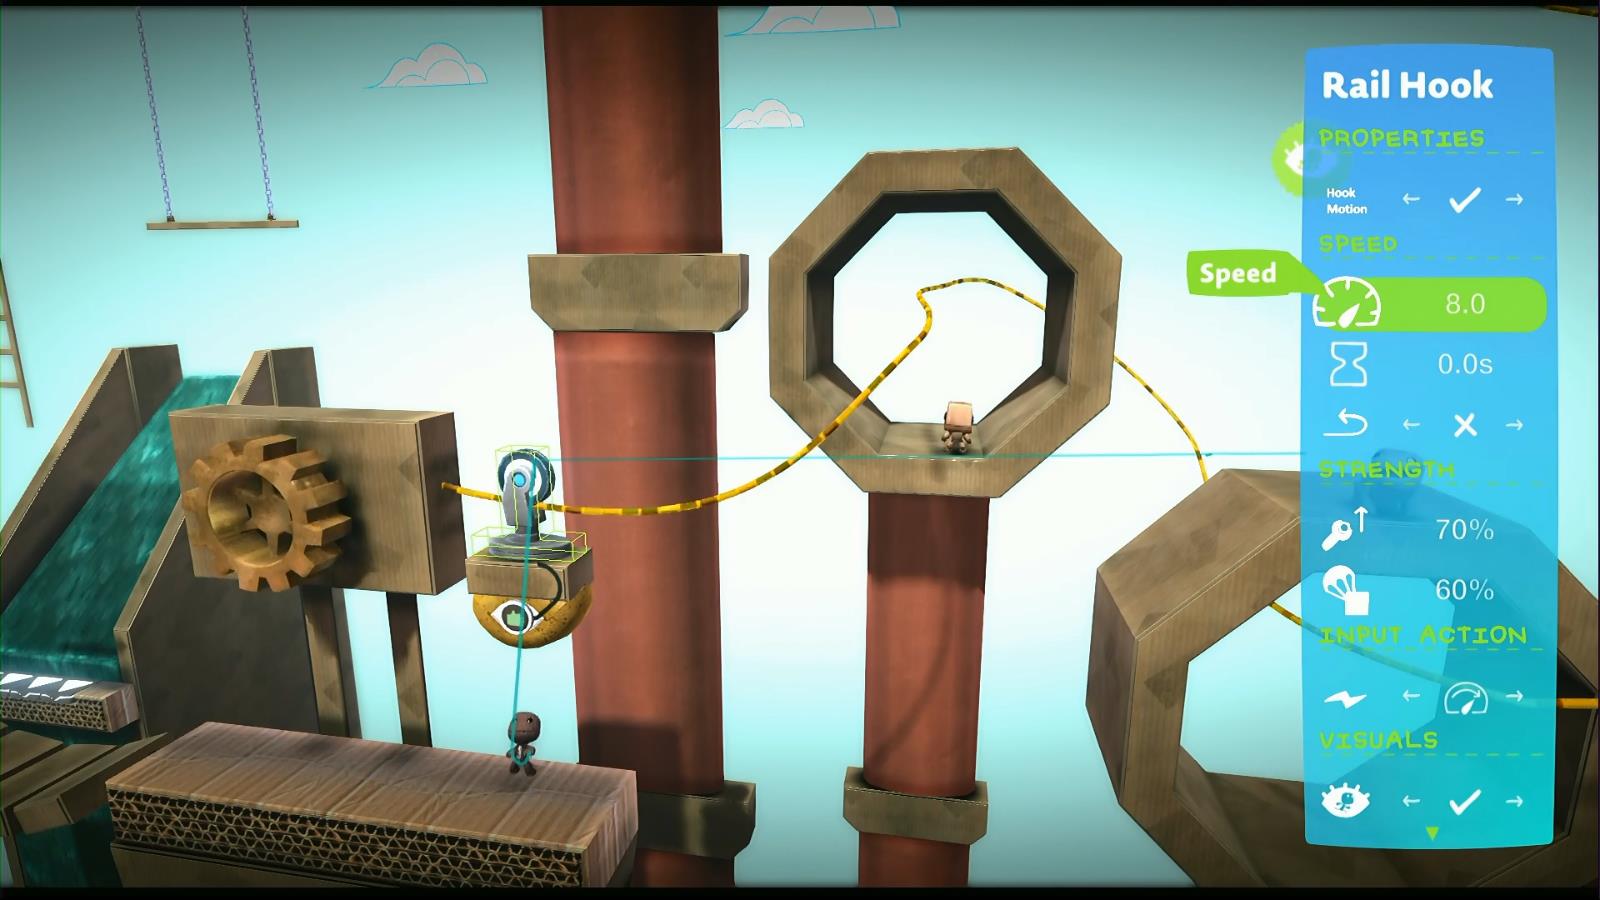 LittleBigPlanet 3 - Creator Mode 07 - Rail Hook Properties